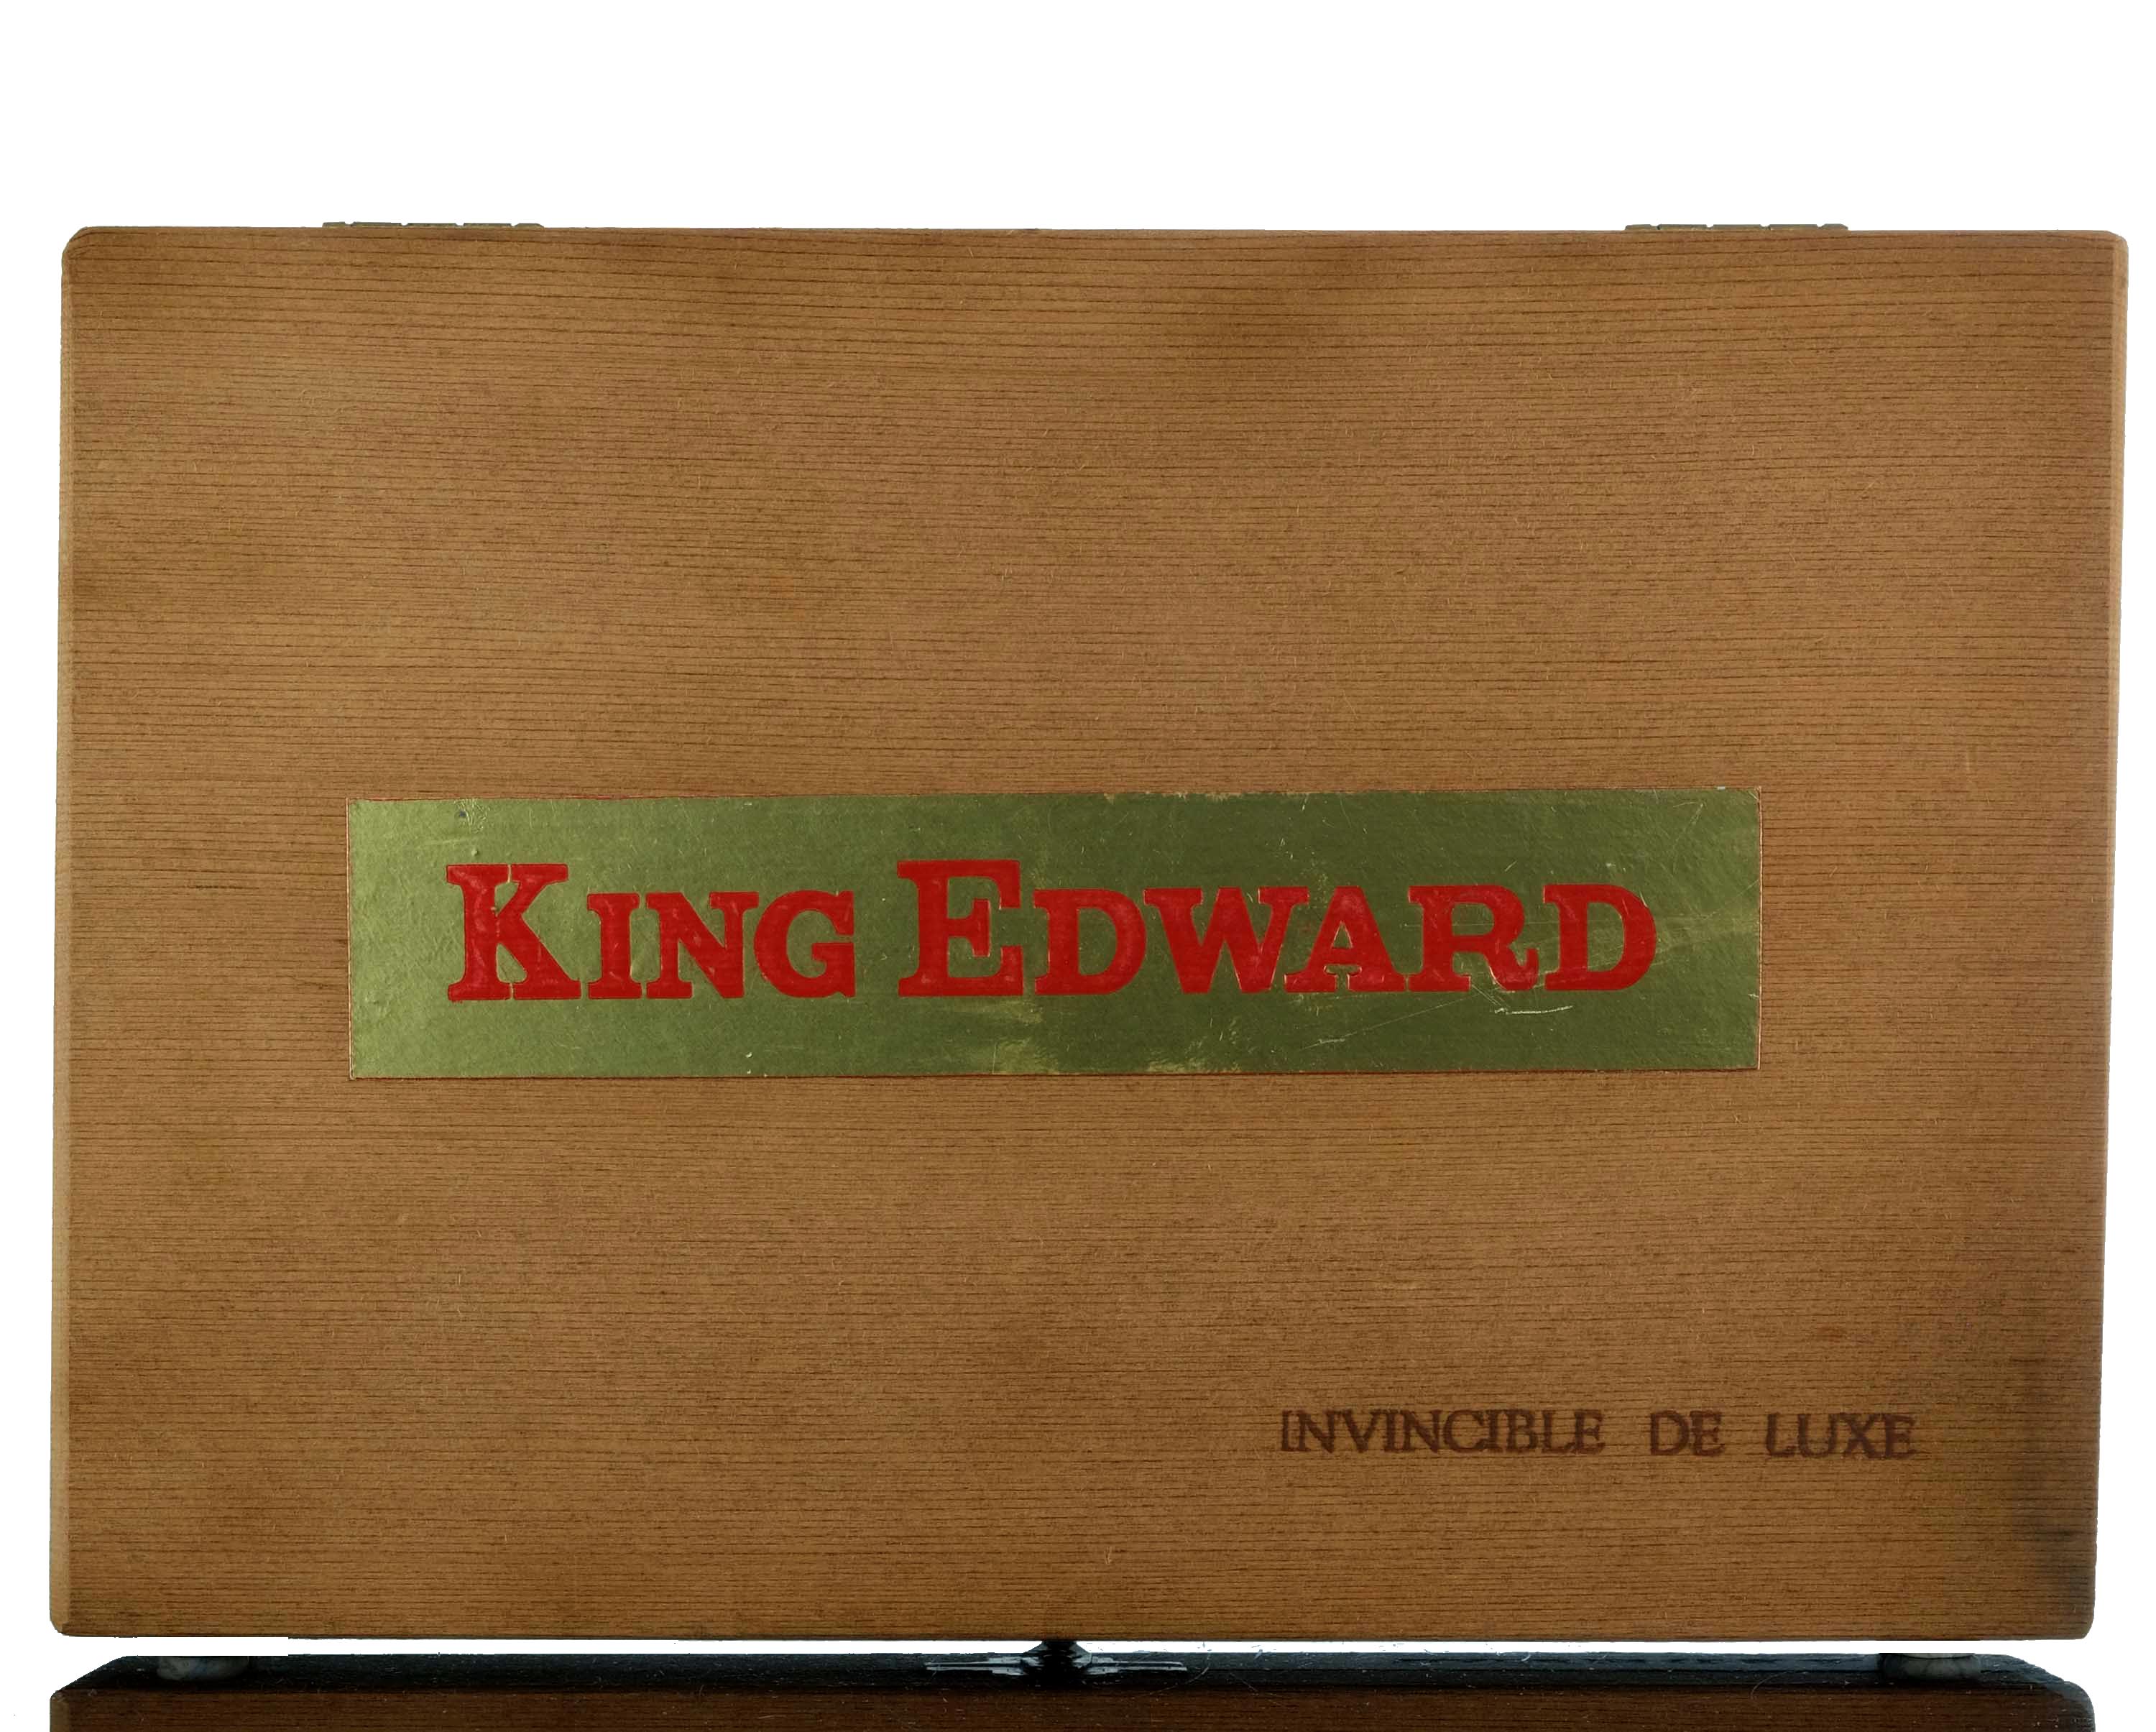 King Edward Cigars